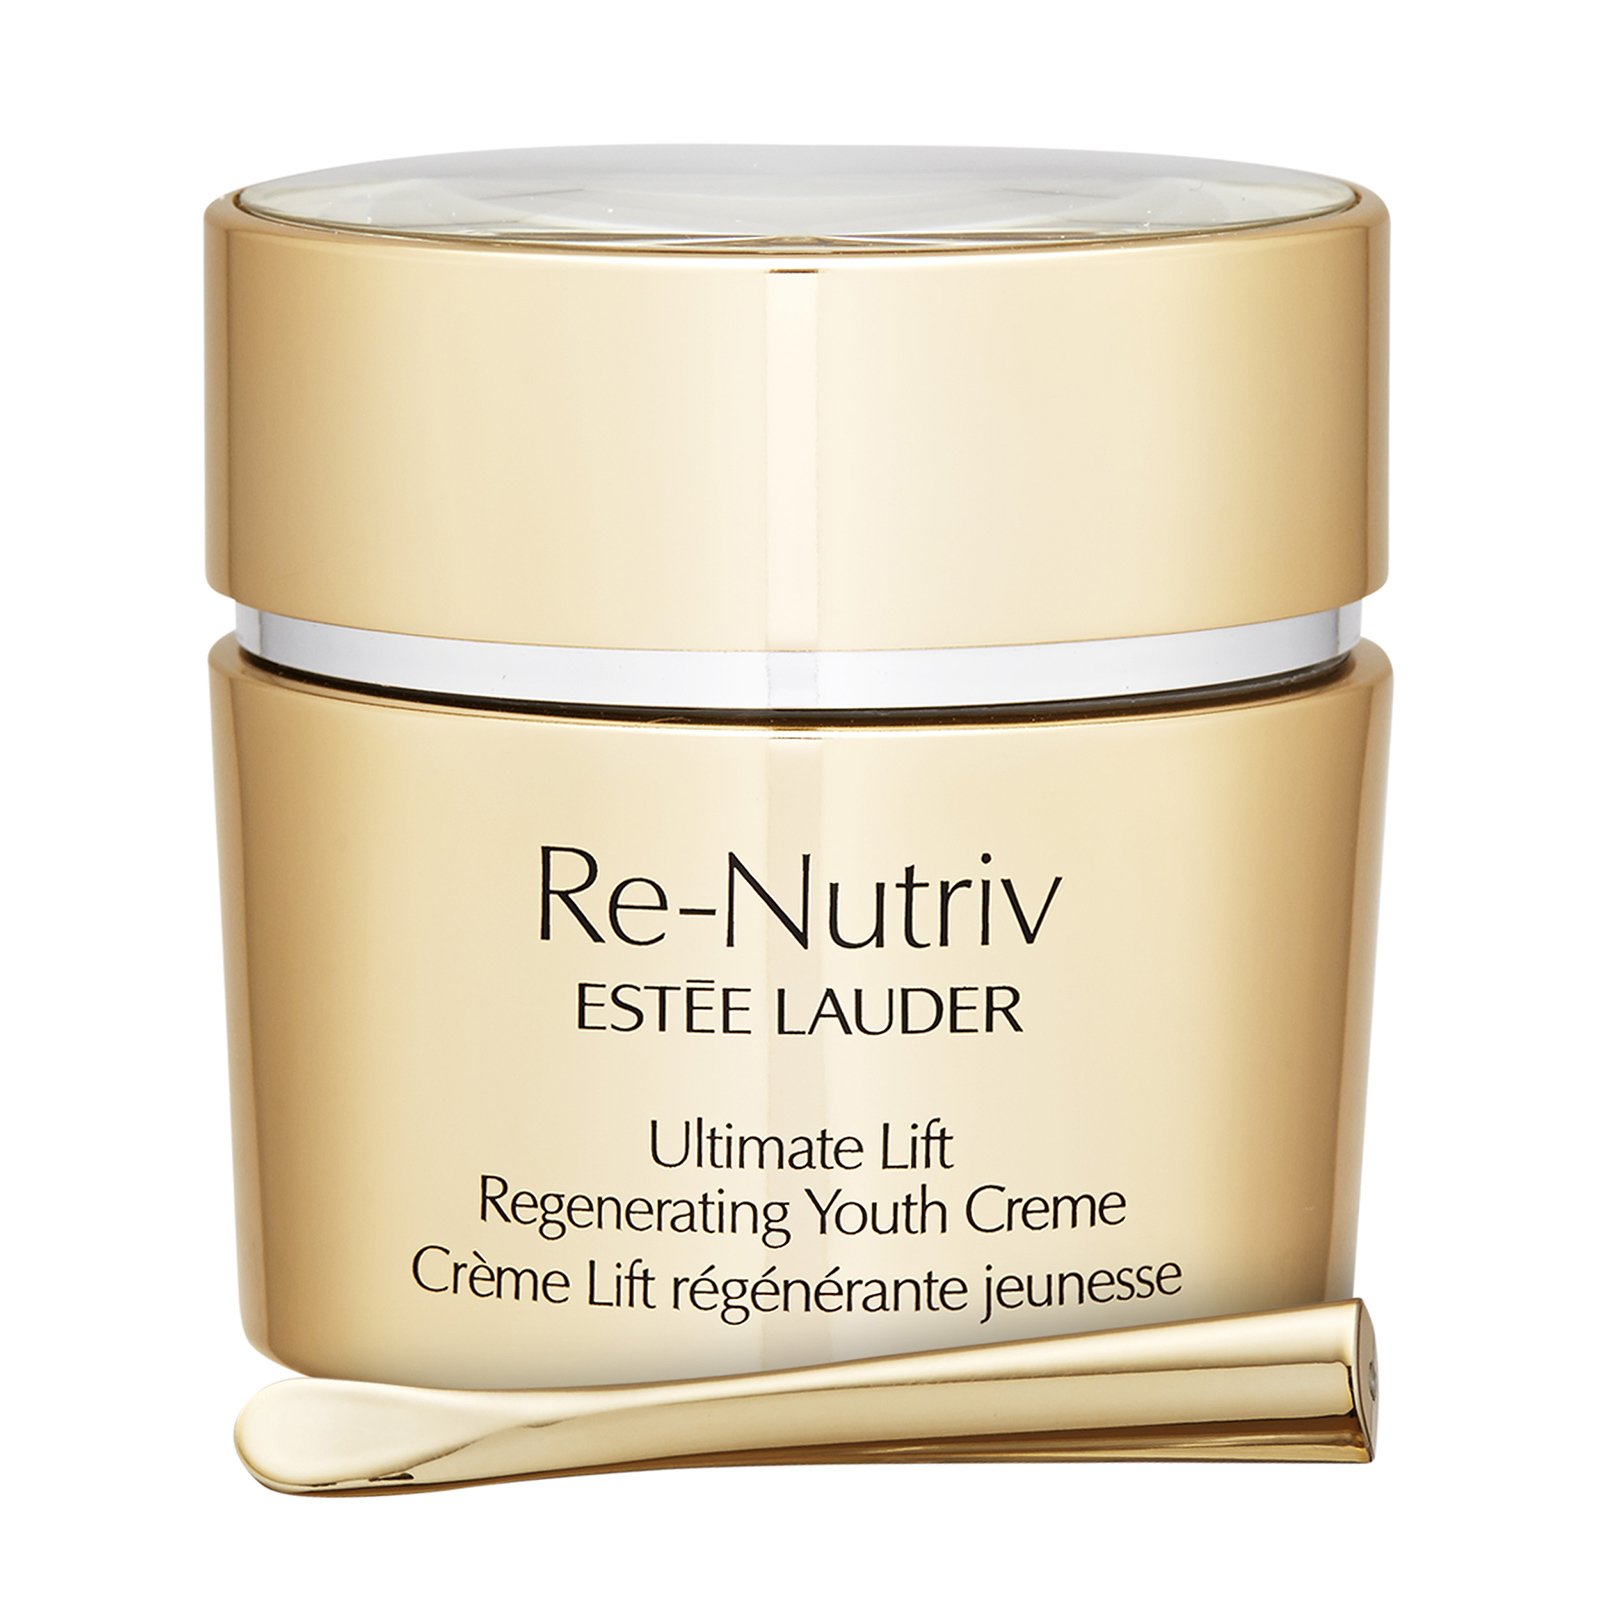 Re-Nutriv Ultimate Lift Regenerating Youth Crème